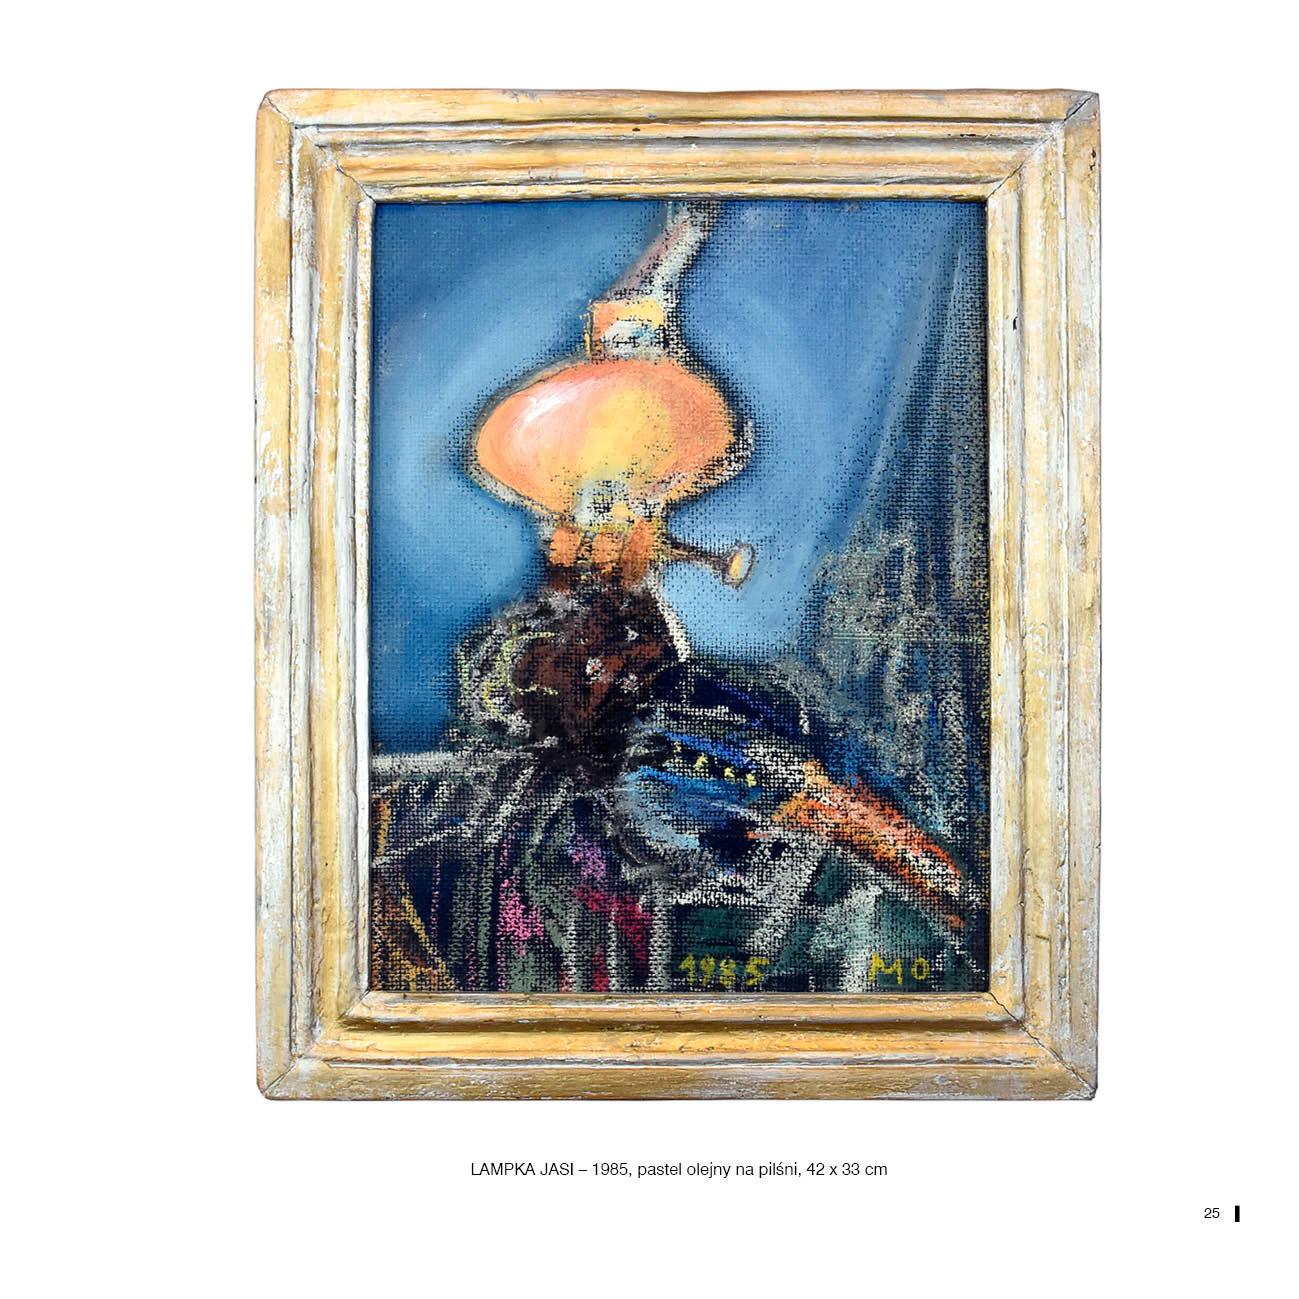 LAMPKA JASI – 1985, pastel olejny na pilśni, 42 x 33 cm